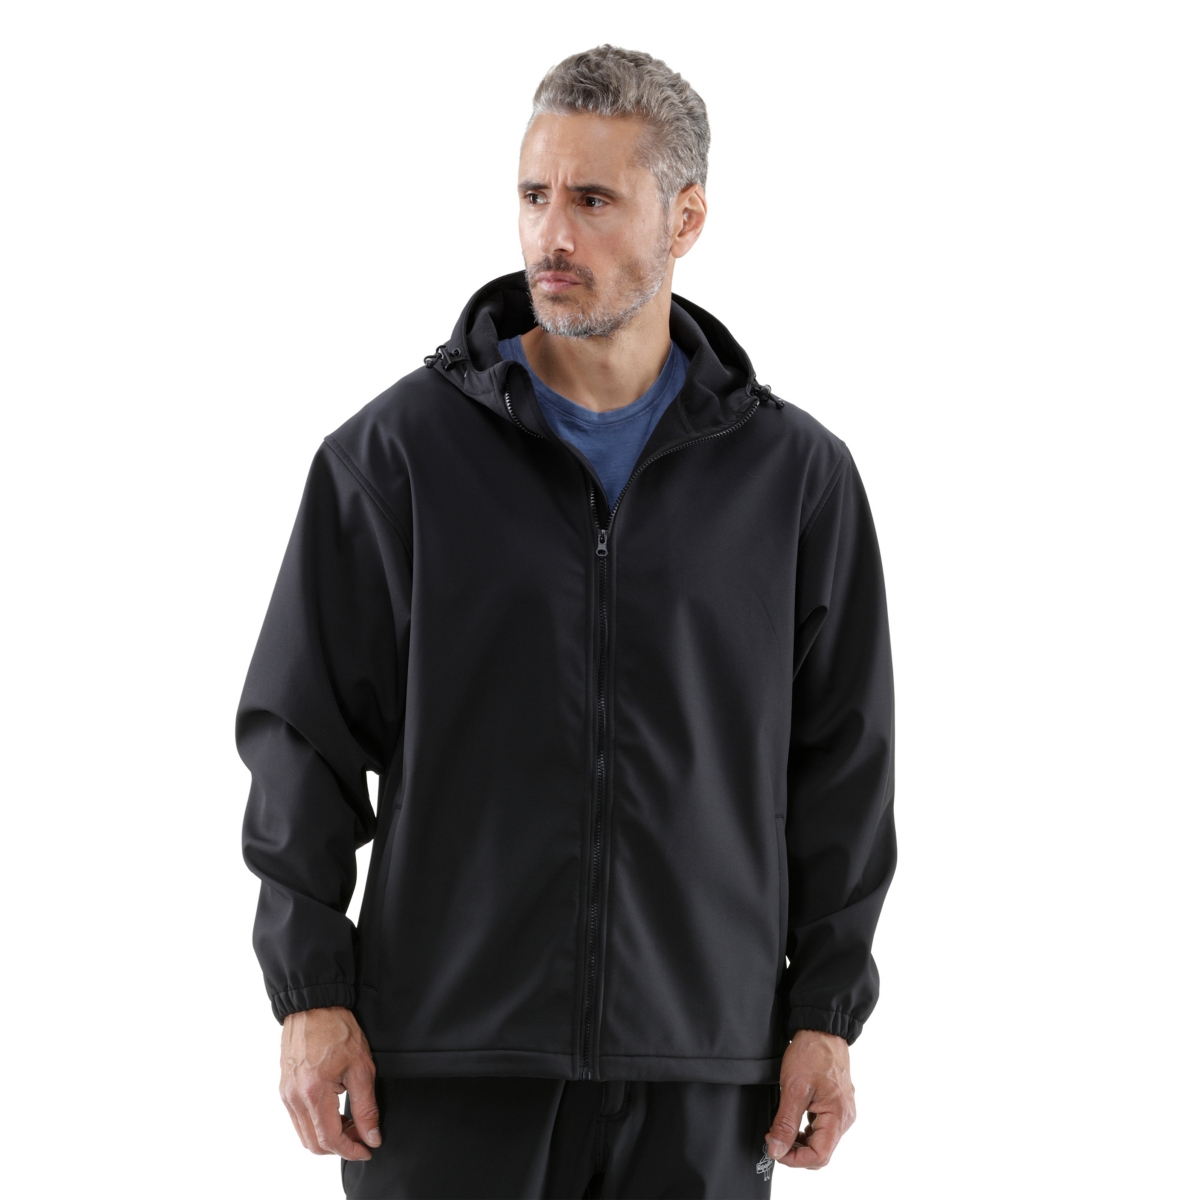 Men's Warm Water-Resistant Lightweight Softshell Jacket with Hood - Black